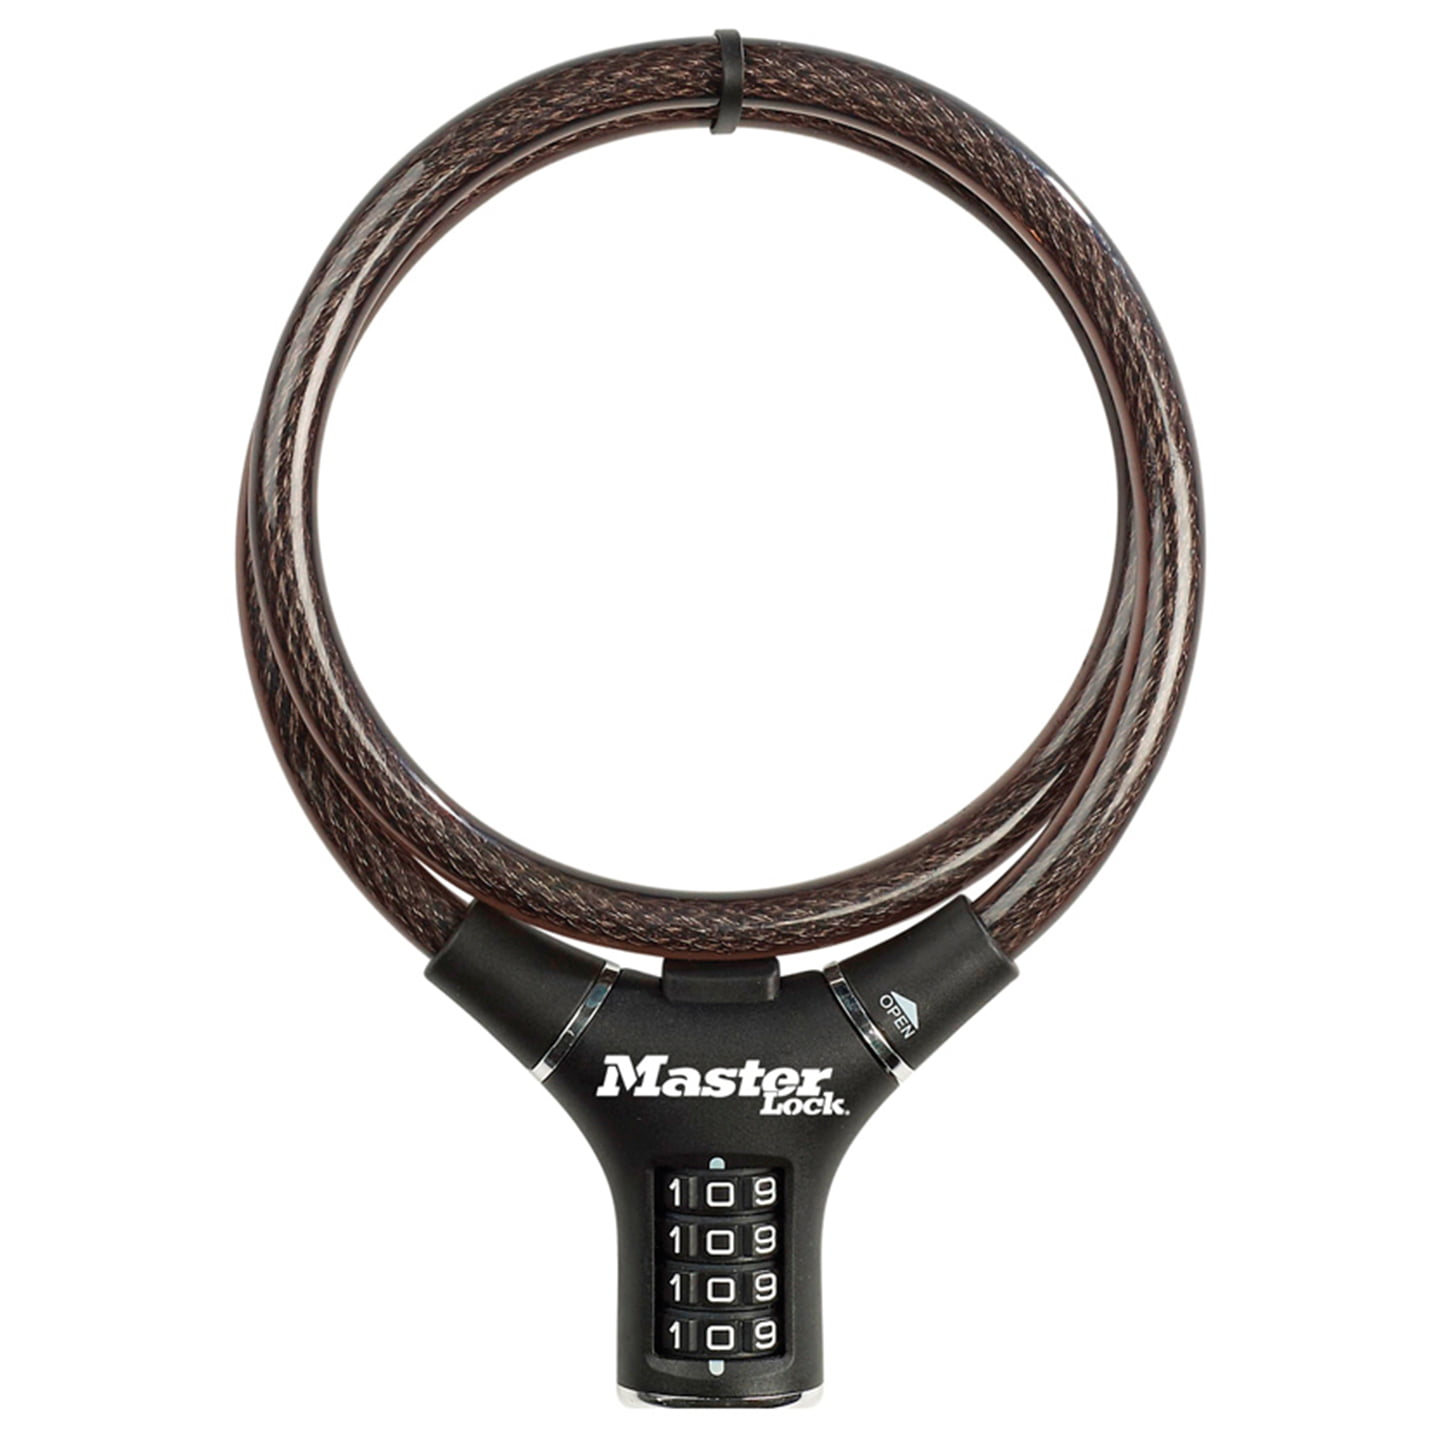 MASTER LOCK 8229 Cable Lock Cable Lock, Bike accessories